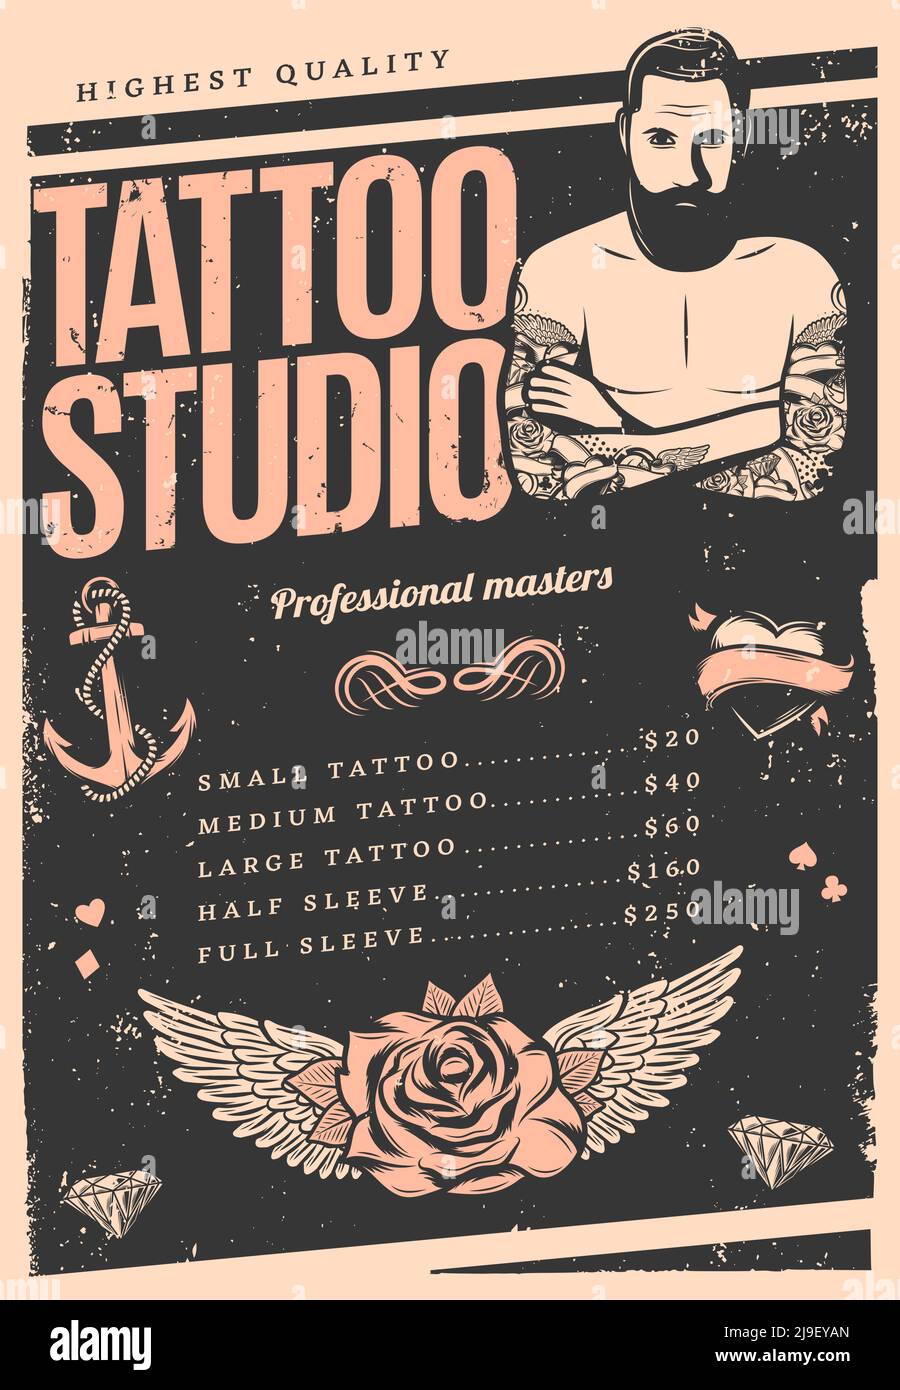 Tattoo studio good tattoos aren't cheap and cheap tattoos aren't good